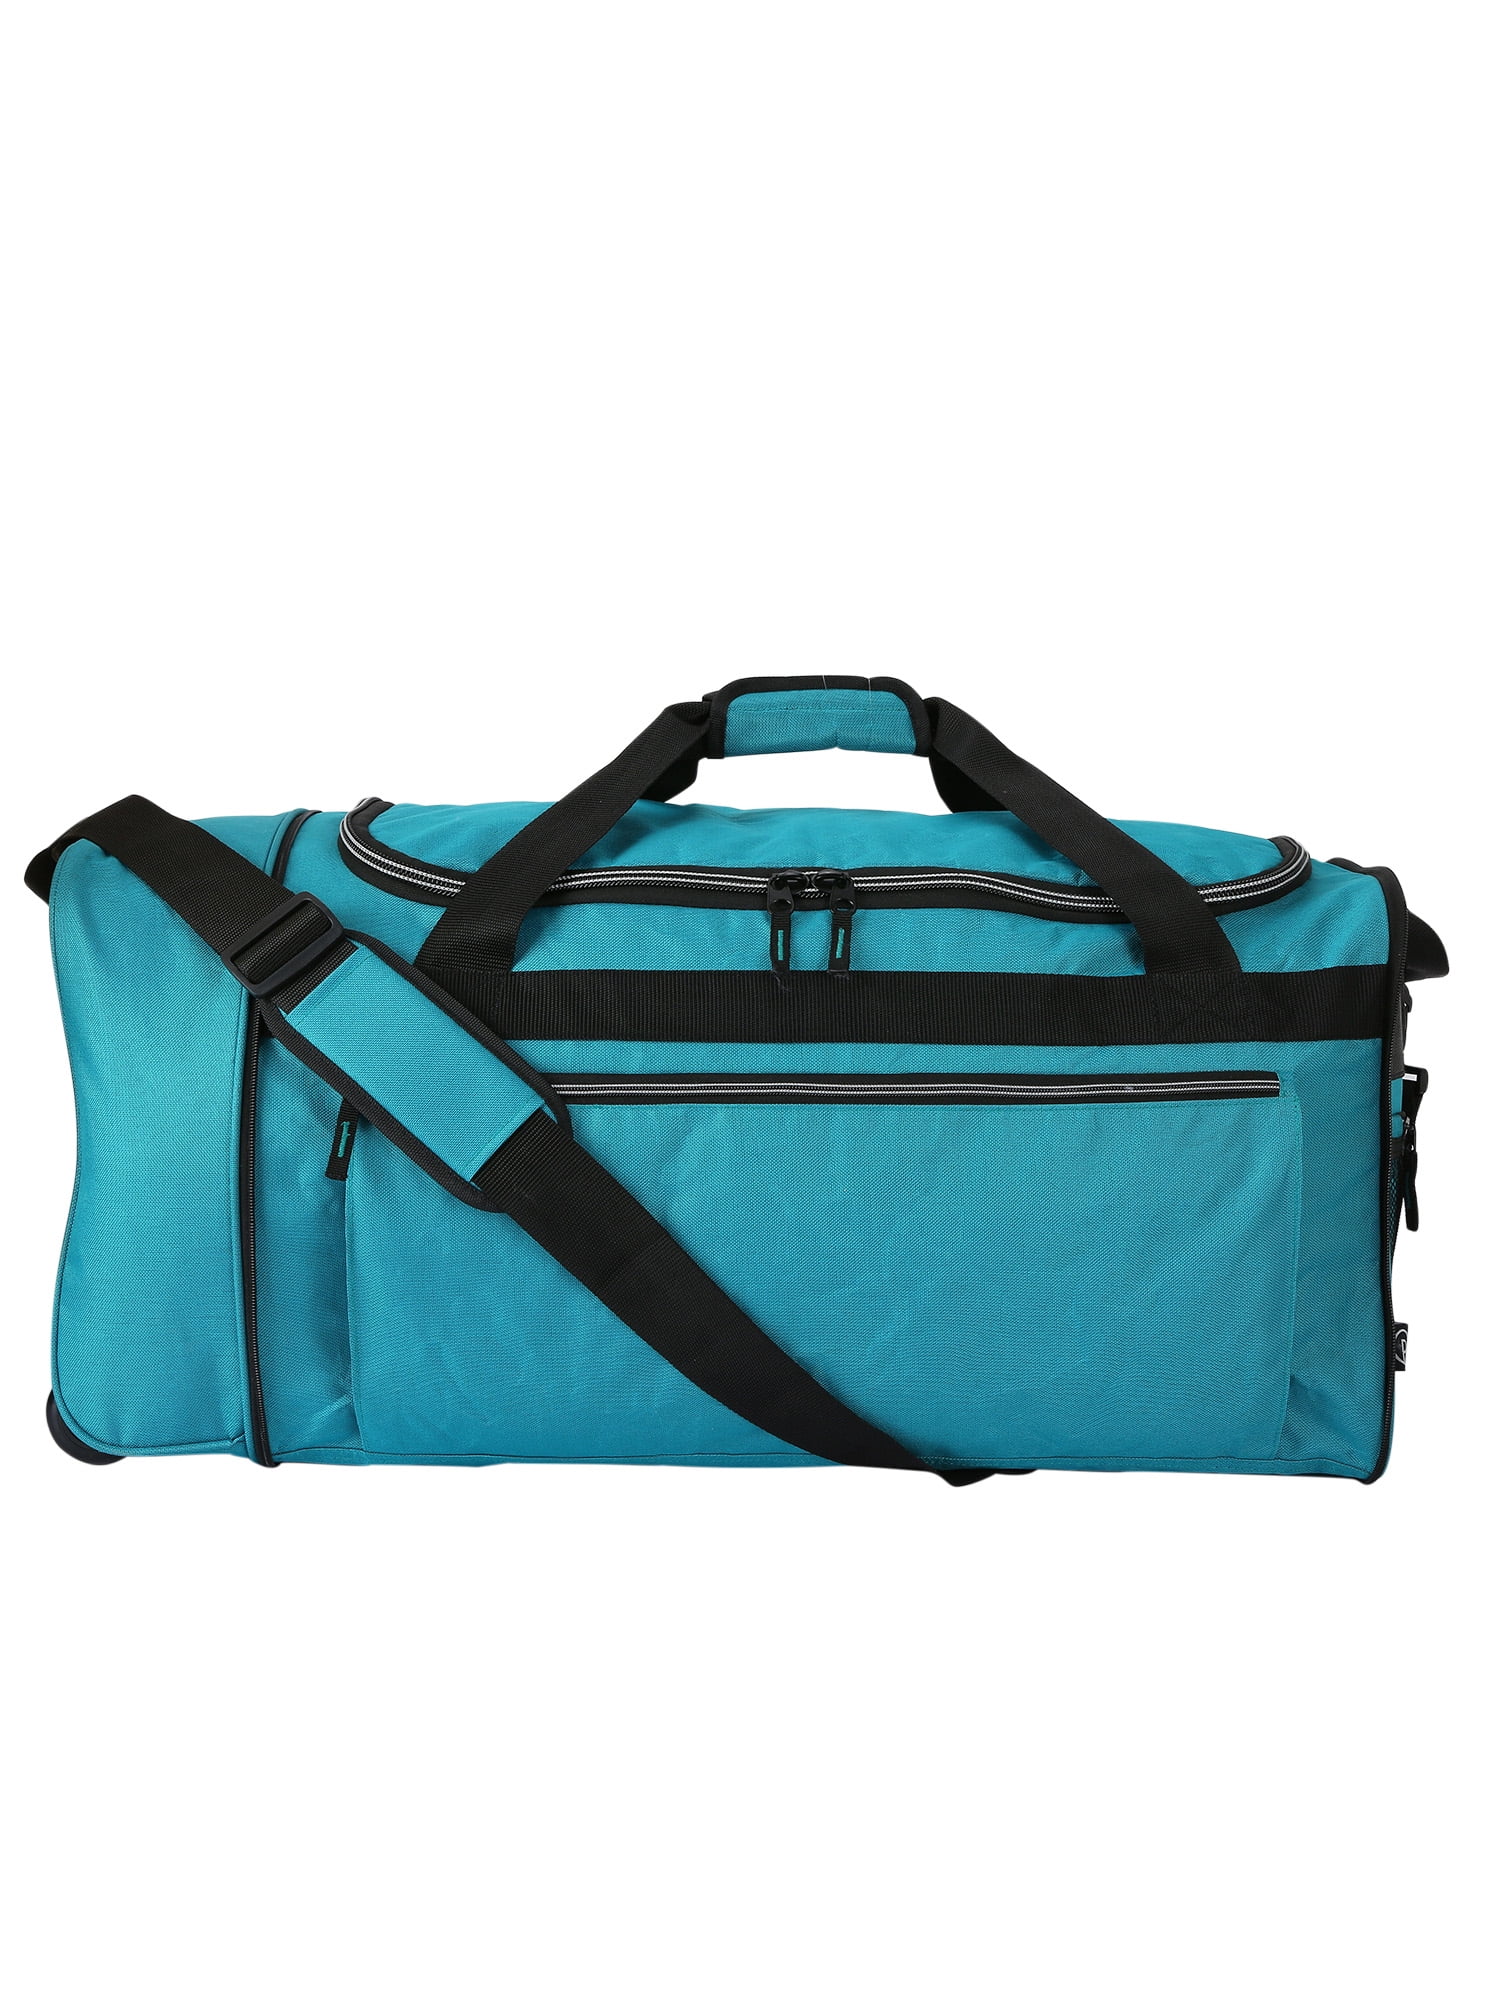 J World Unisex Kids travel Duffle Bag with Wheels, Penguin - Walmart.com